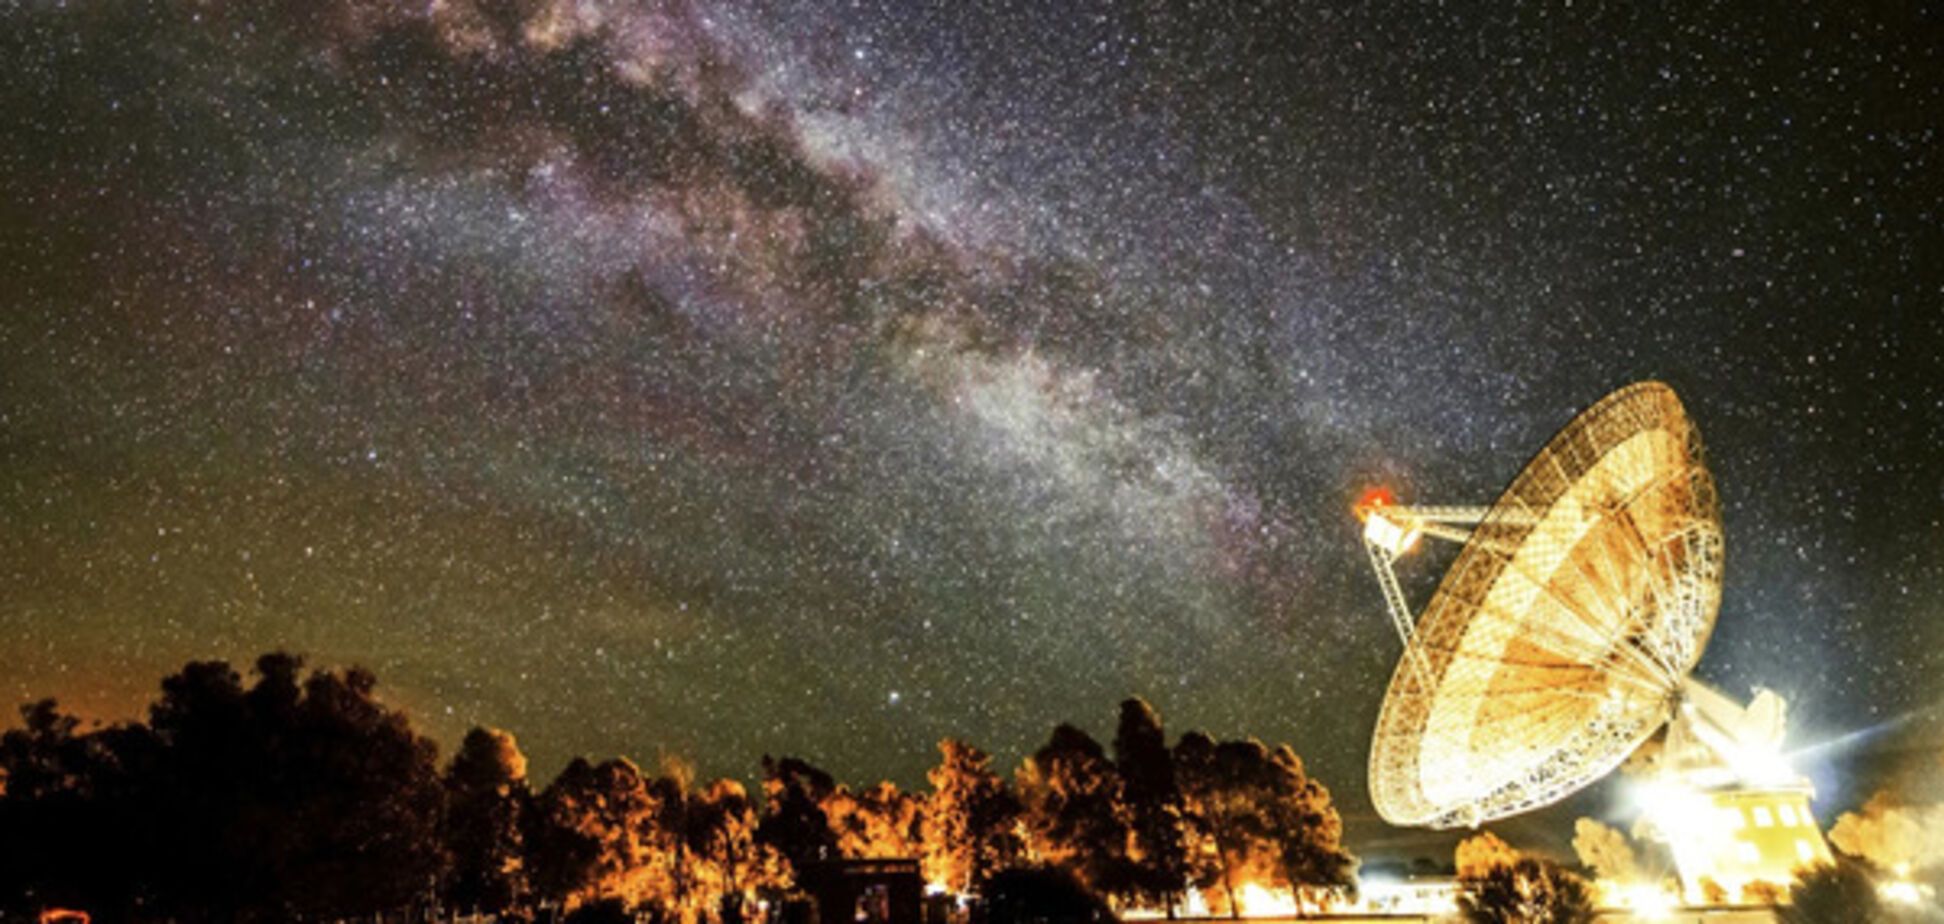 радиотелескоп и звездное небо